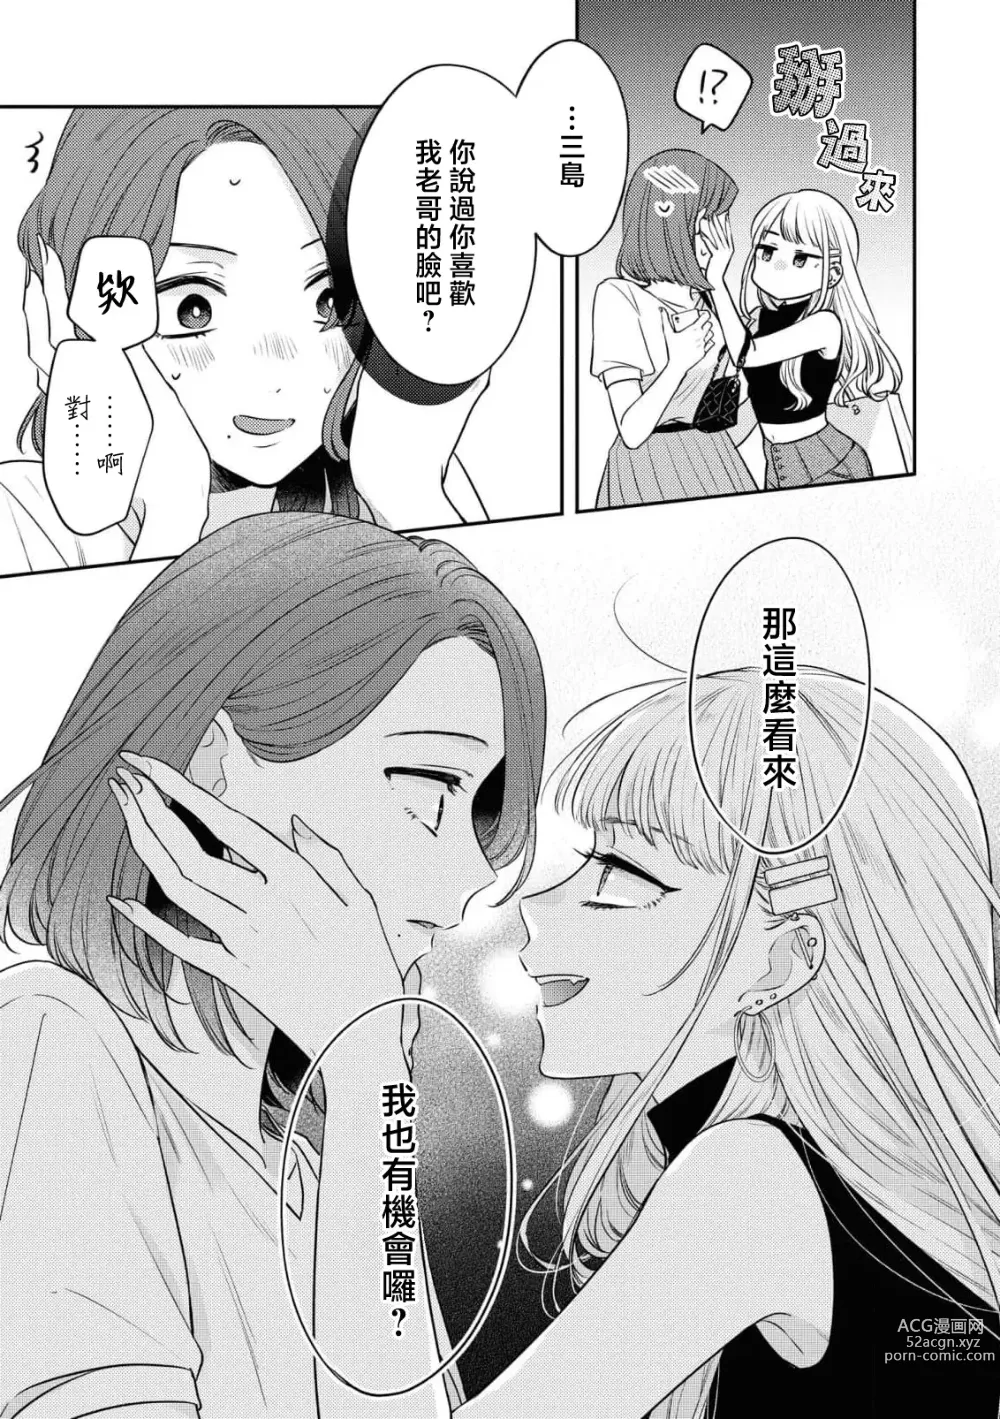 Page 14 of manga 等不及全熟（doujinonna yuri ansoroji-）